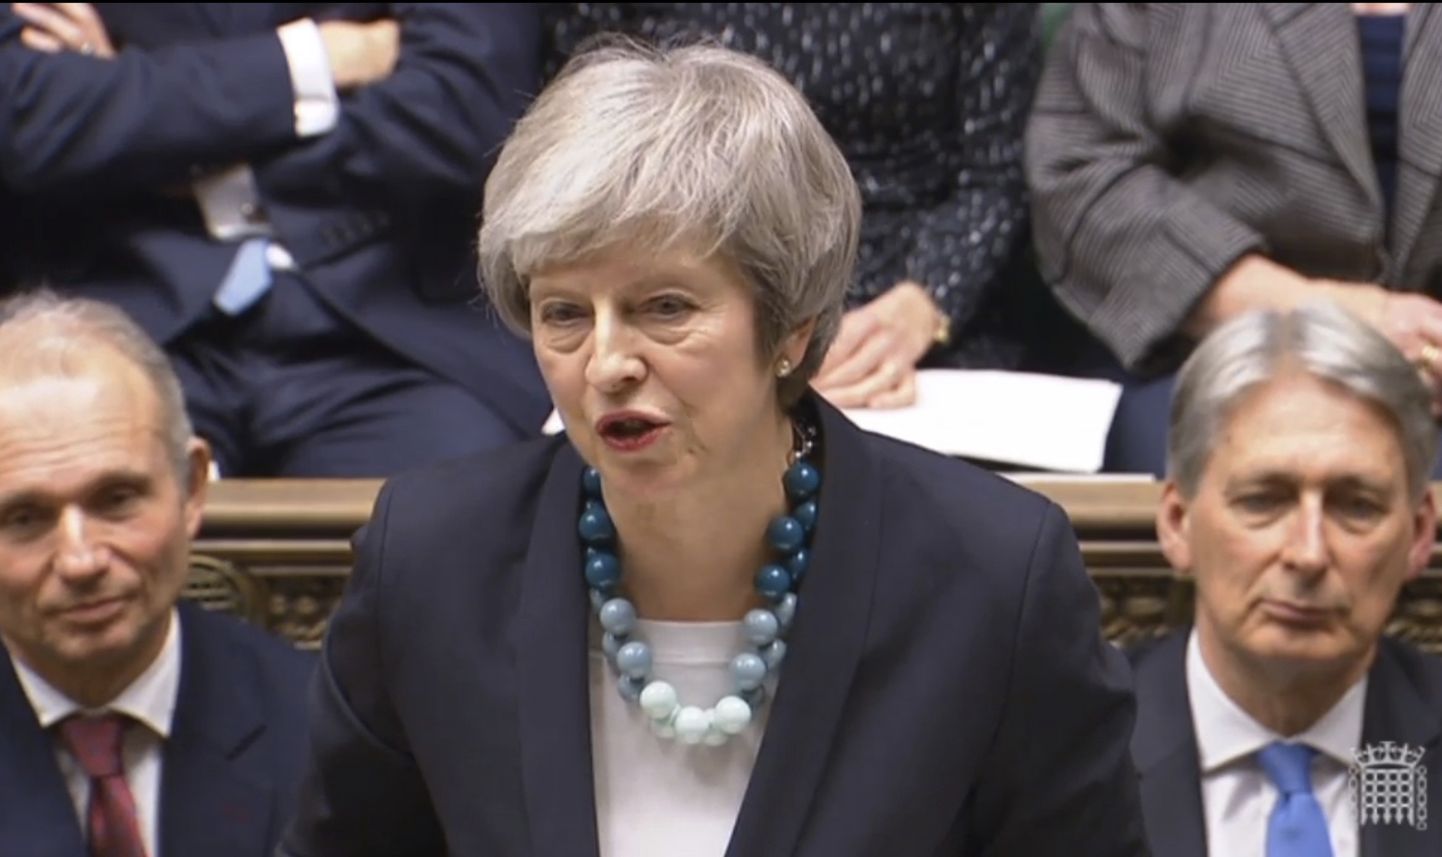 Briti peaminister Theresa May parlamendis.